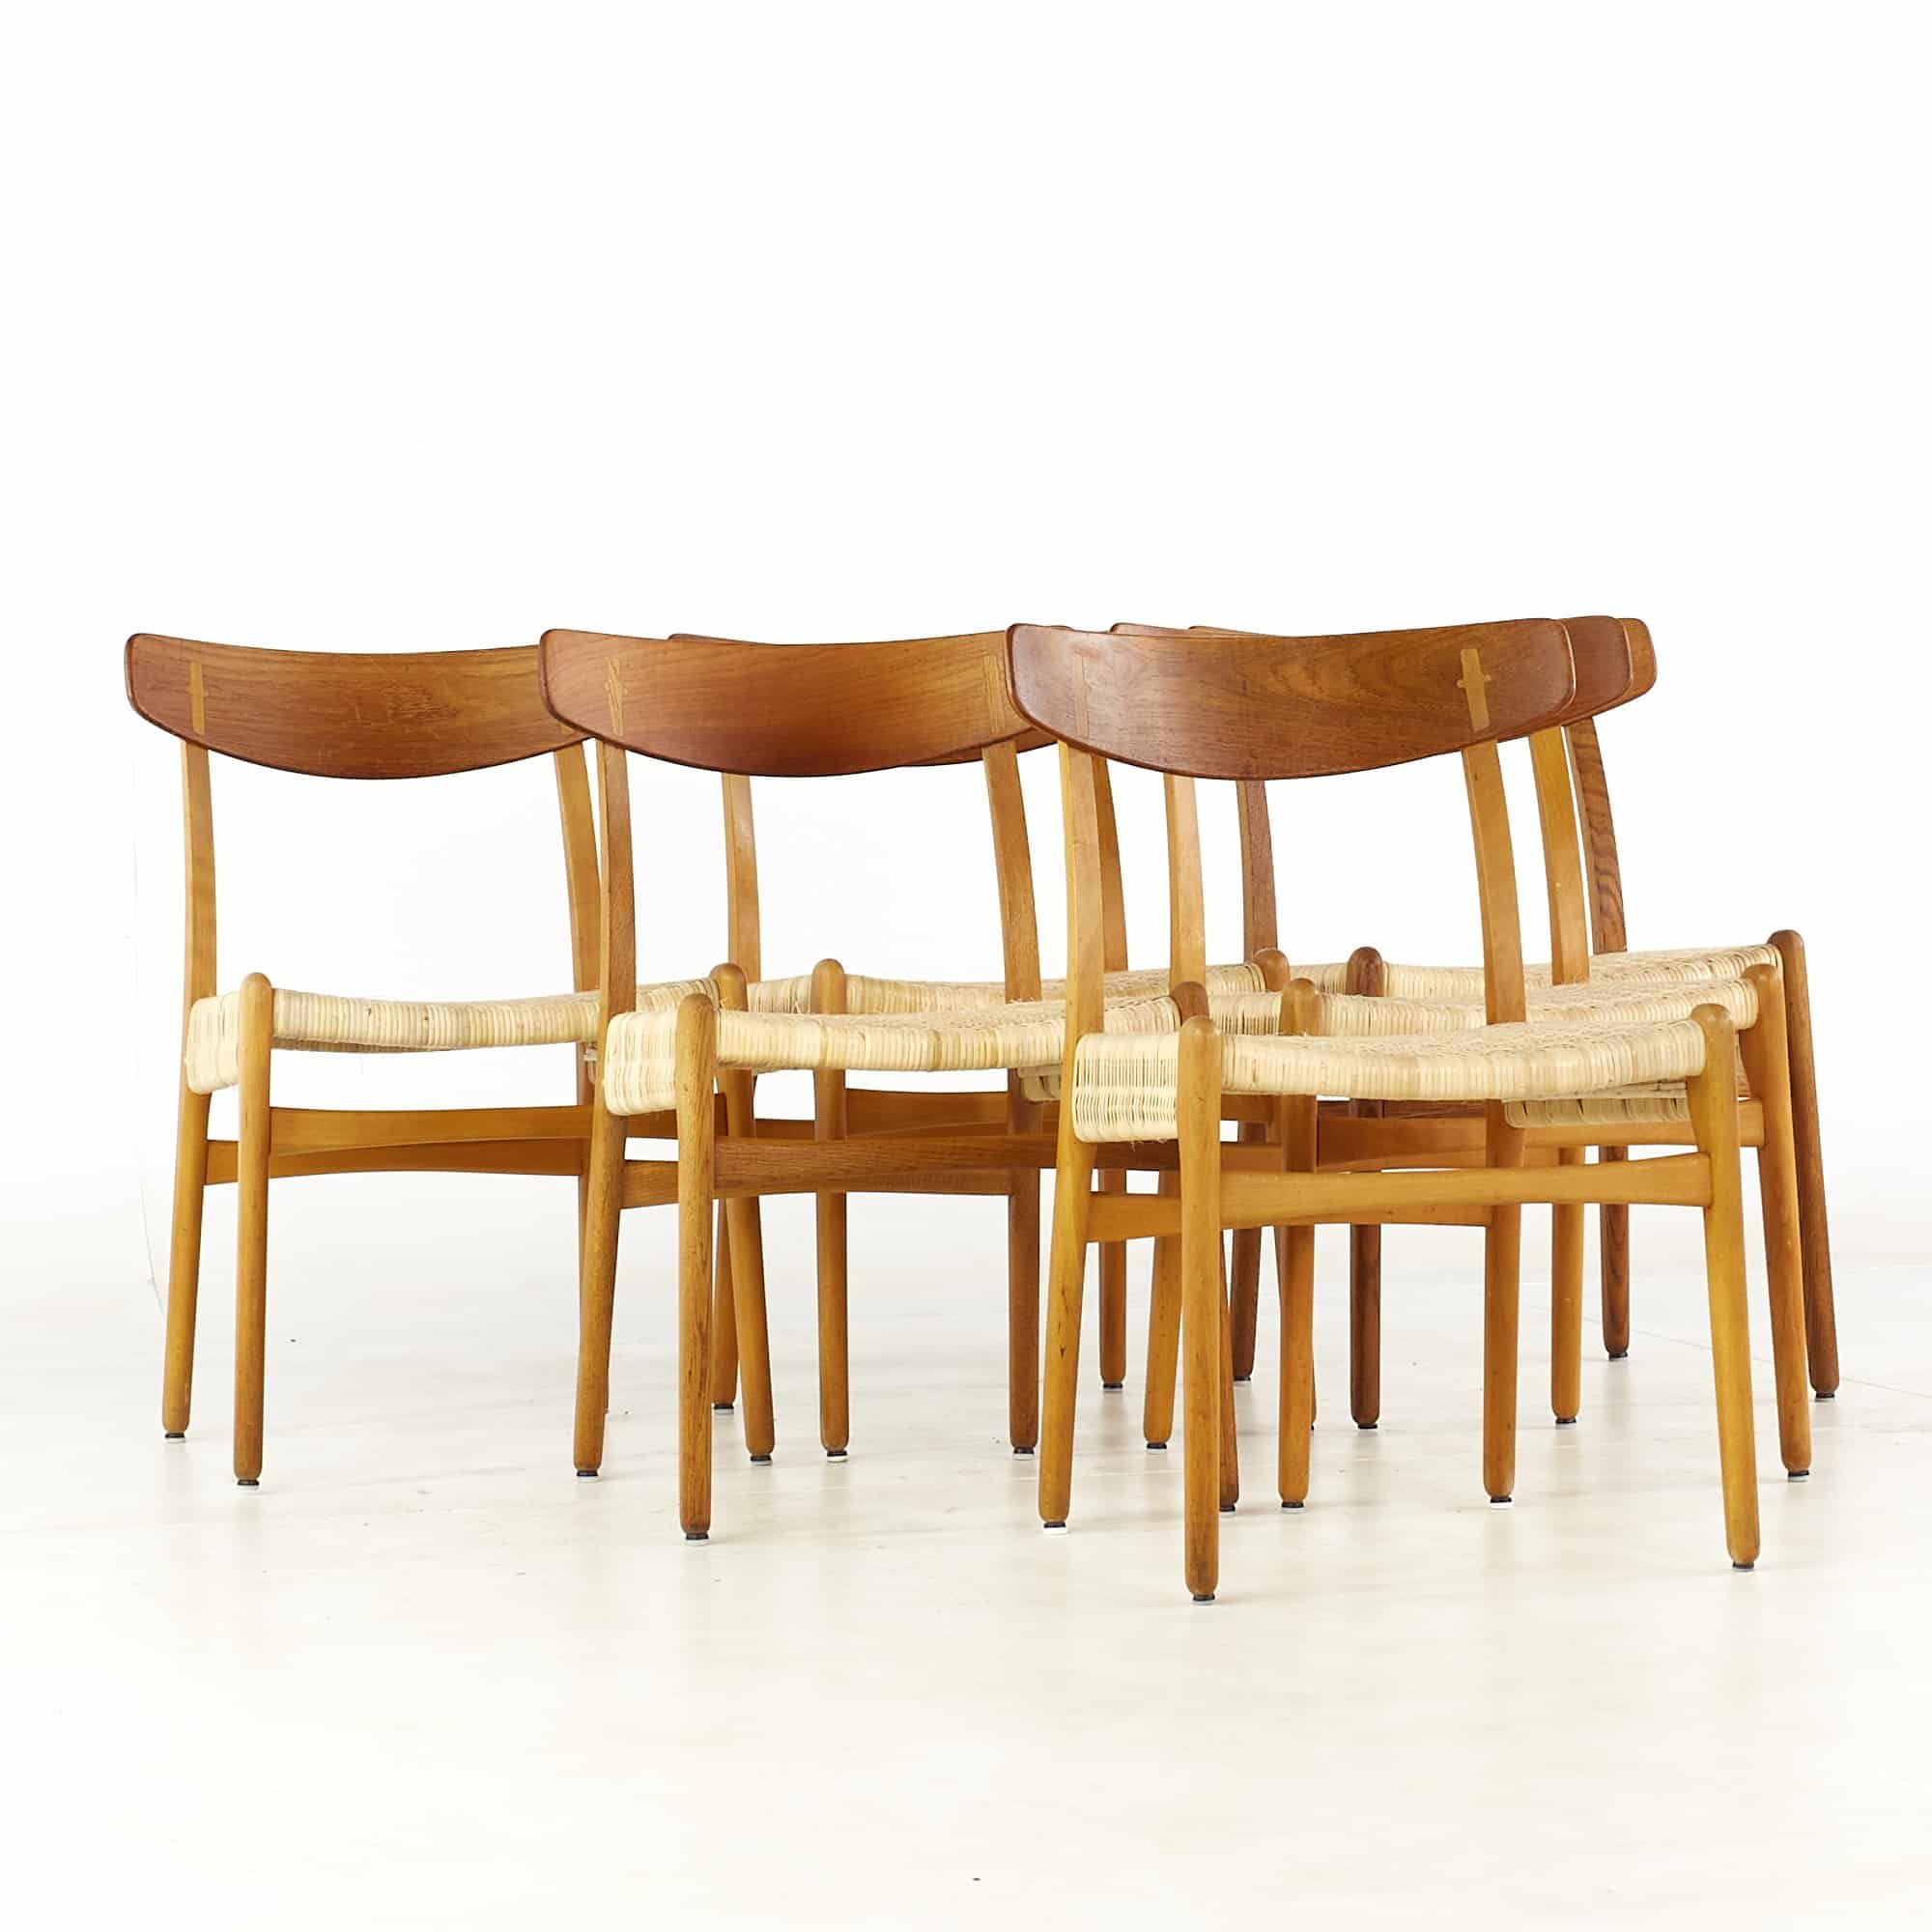 Hans Wegner for Carl Hansen and Son Mid Century Teak Ch23 Dining Chairs - Set of 6